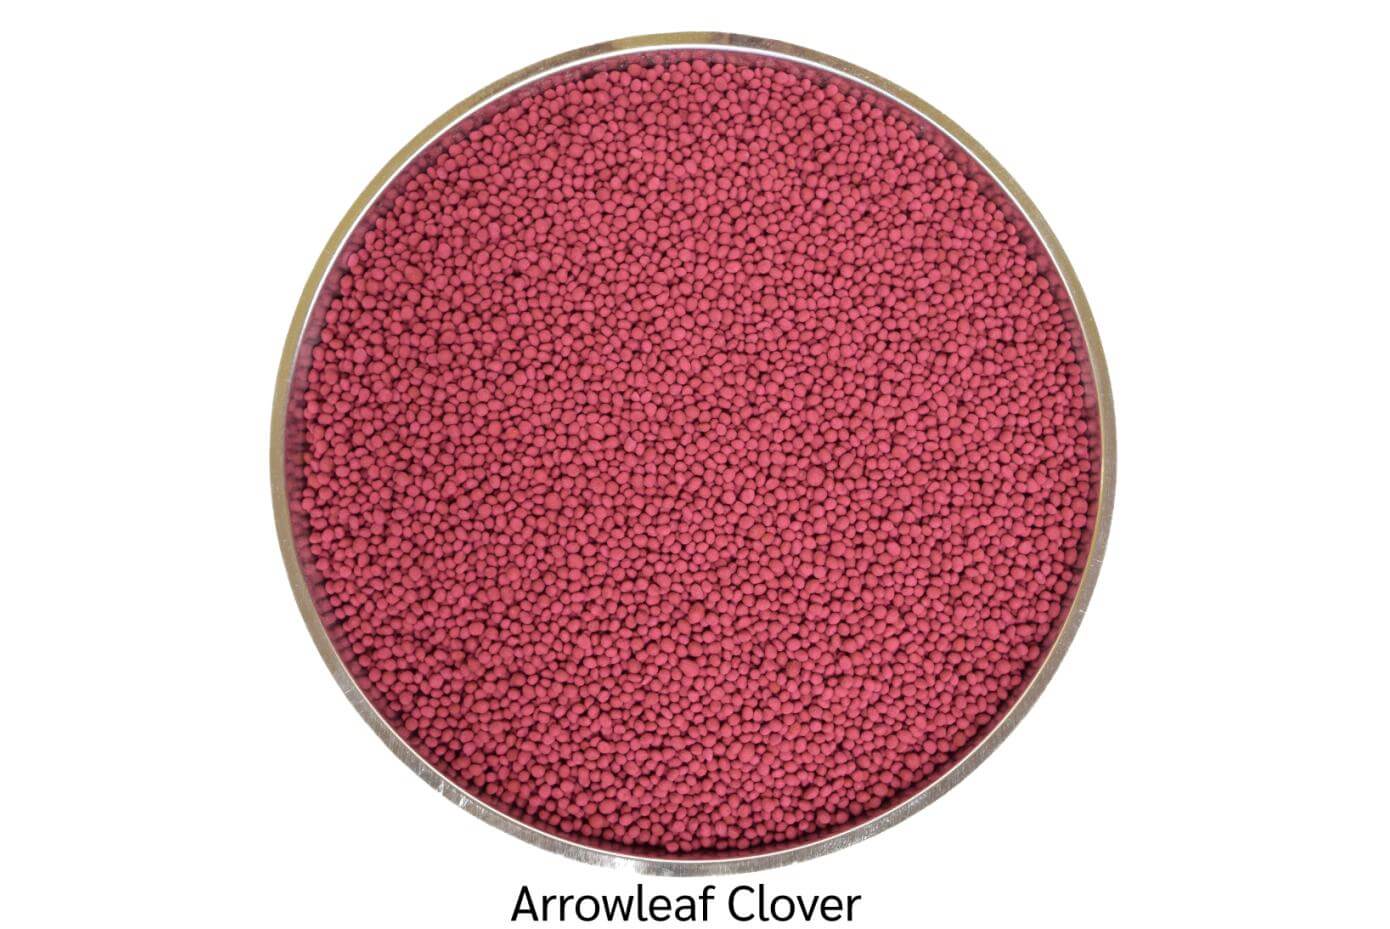 Coated arrowleaf clover